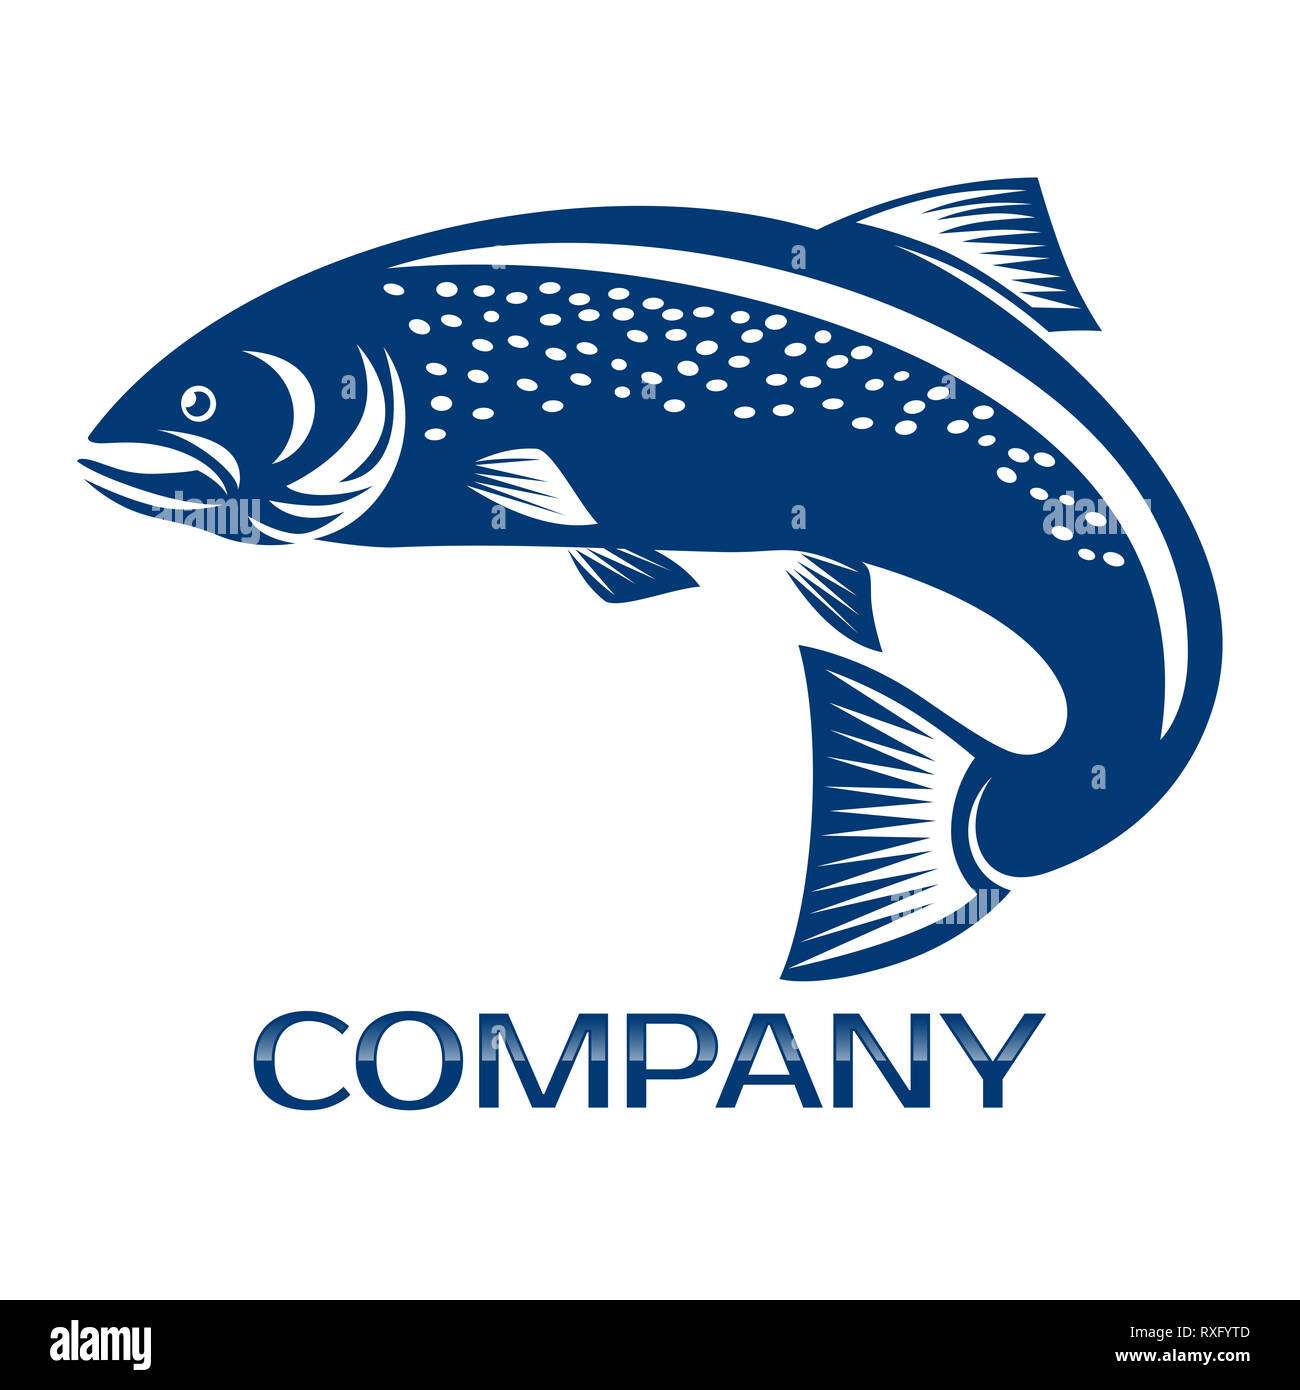 Salmon fish and fishing logo Stock Photo - Alamy